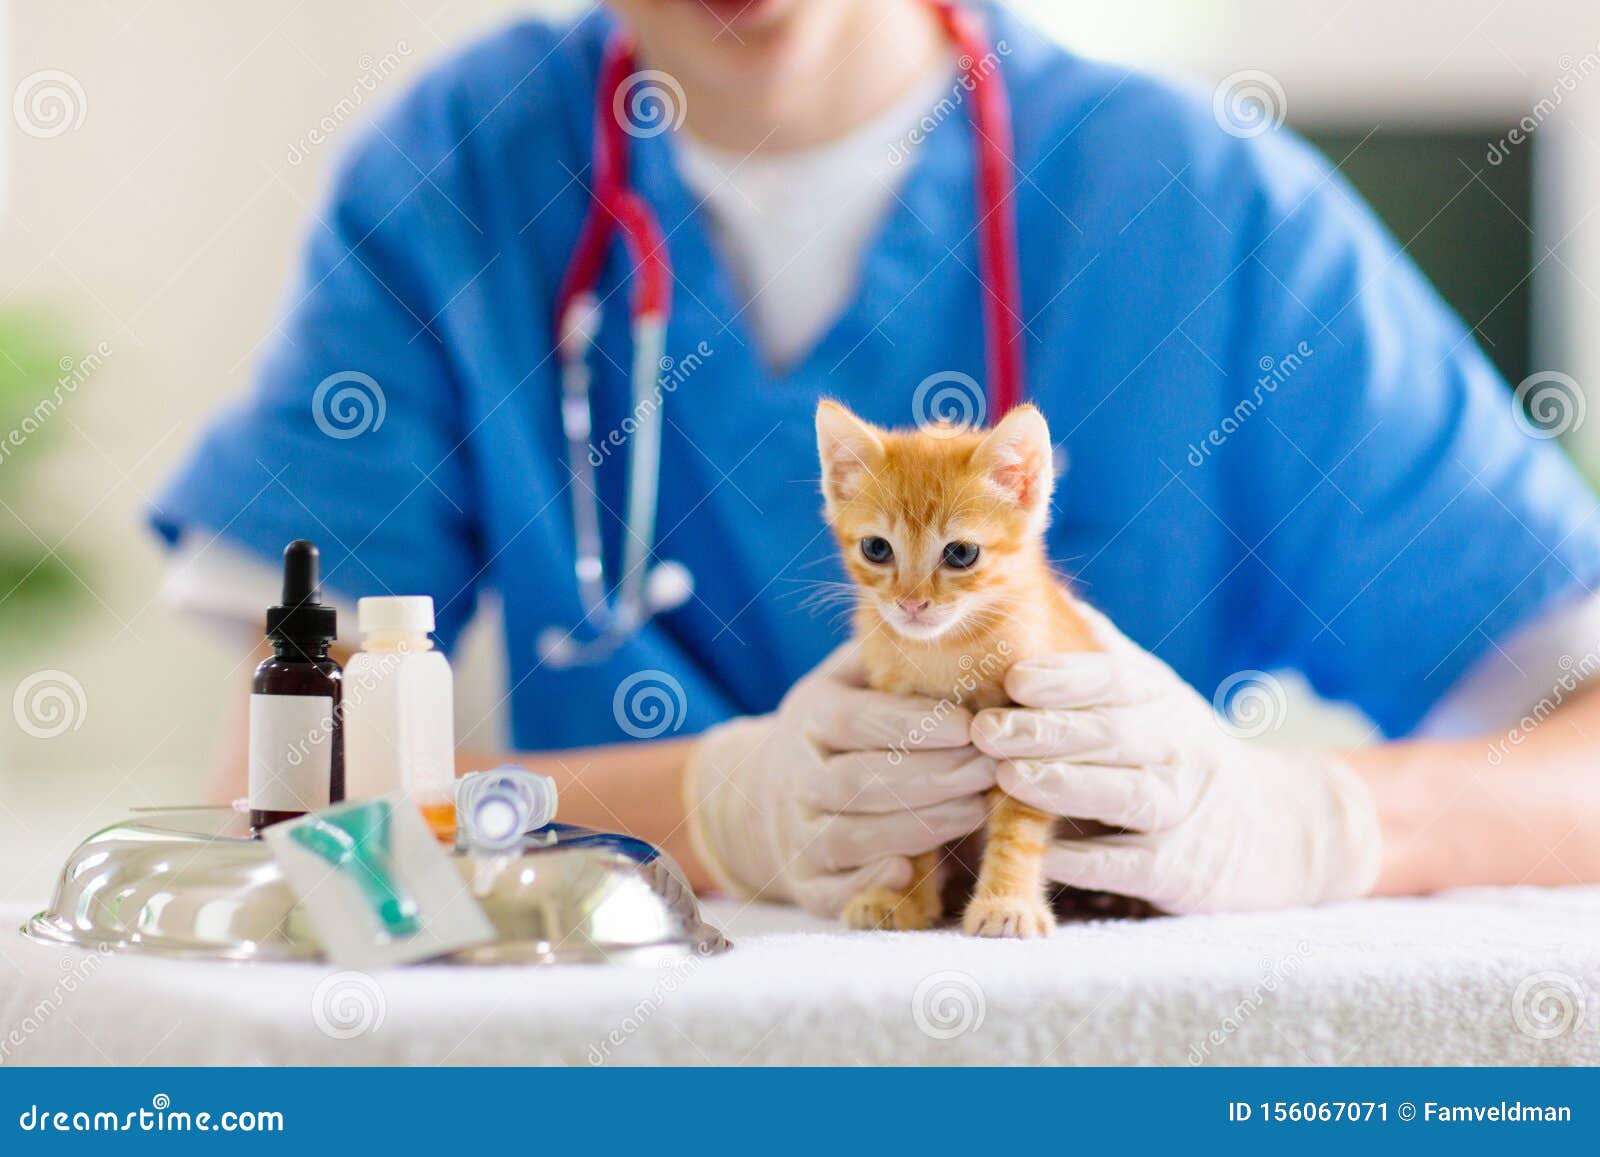 vet with cat. kitten at veterinarian doctor